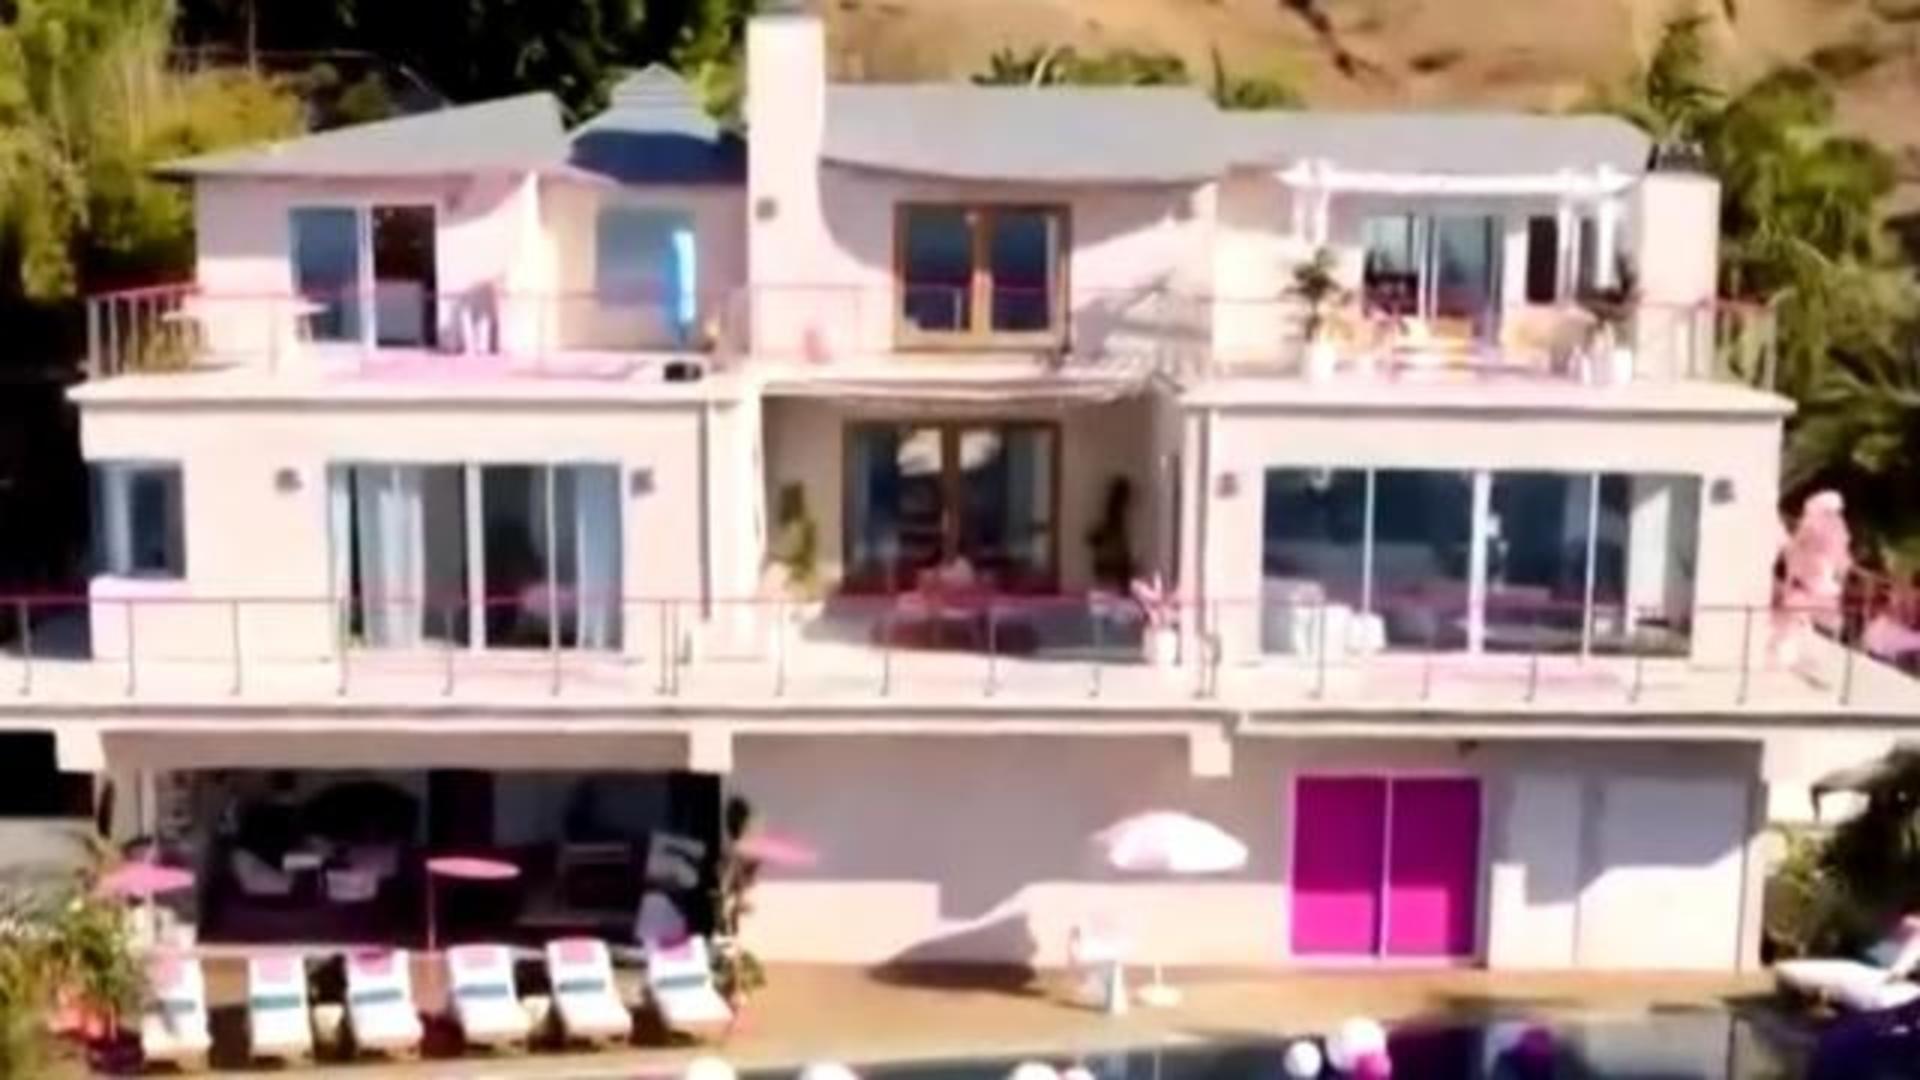 Barbie's Malibu Dreamhouse available to rent via Airbnb - CBS News